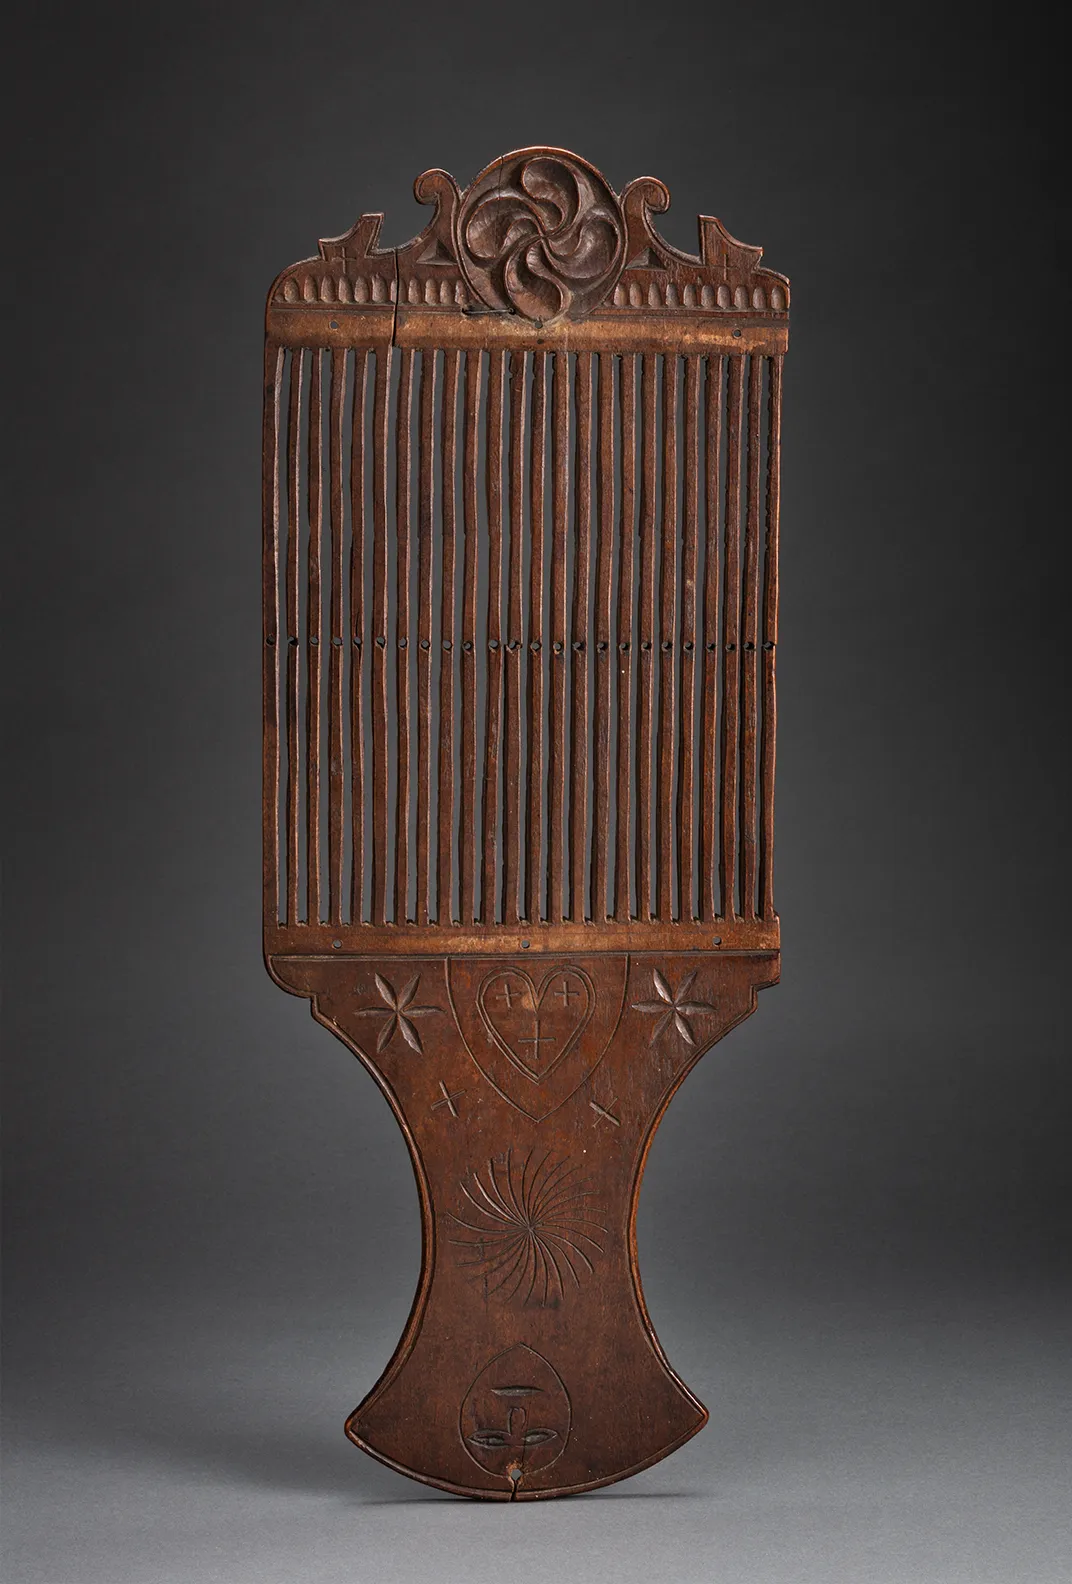 Tape loom owned by Rebecca Putnam, sister of Salem Witch Trials accuser Ann Putnam, 1690–1710